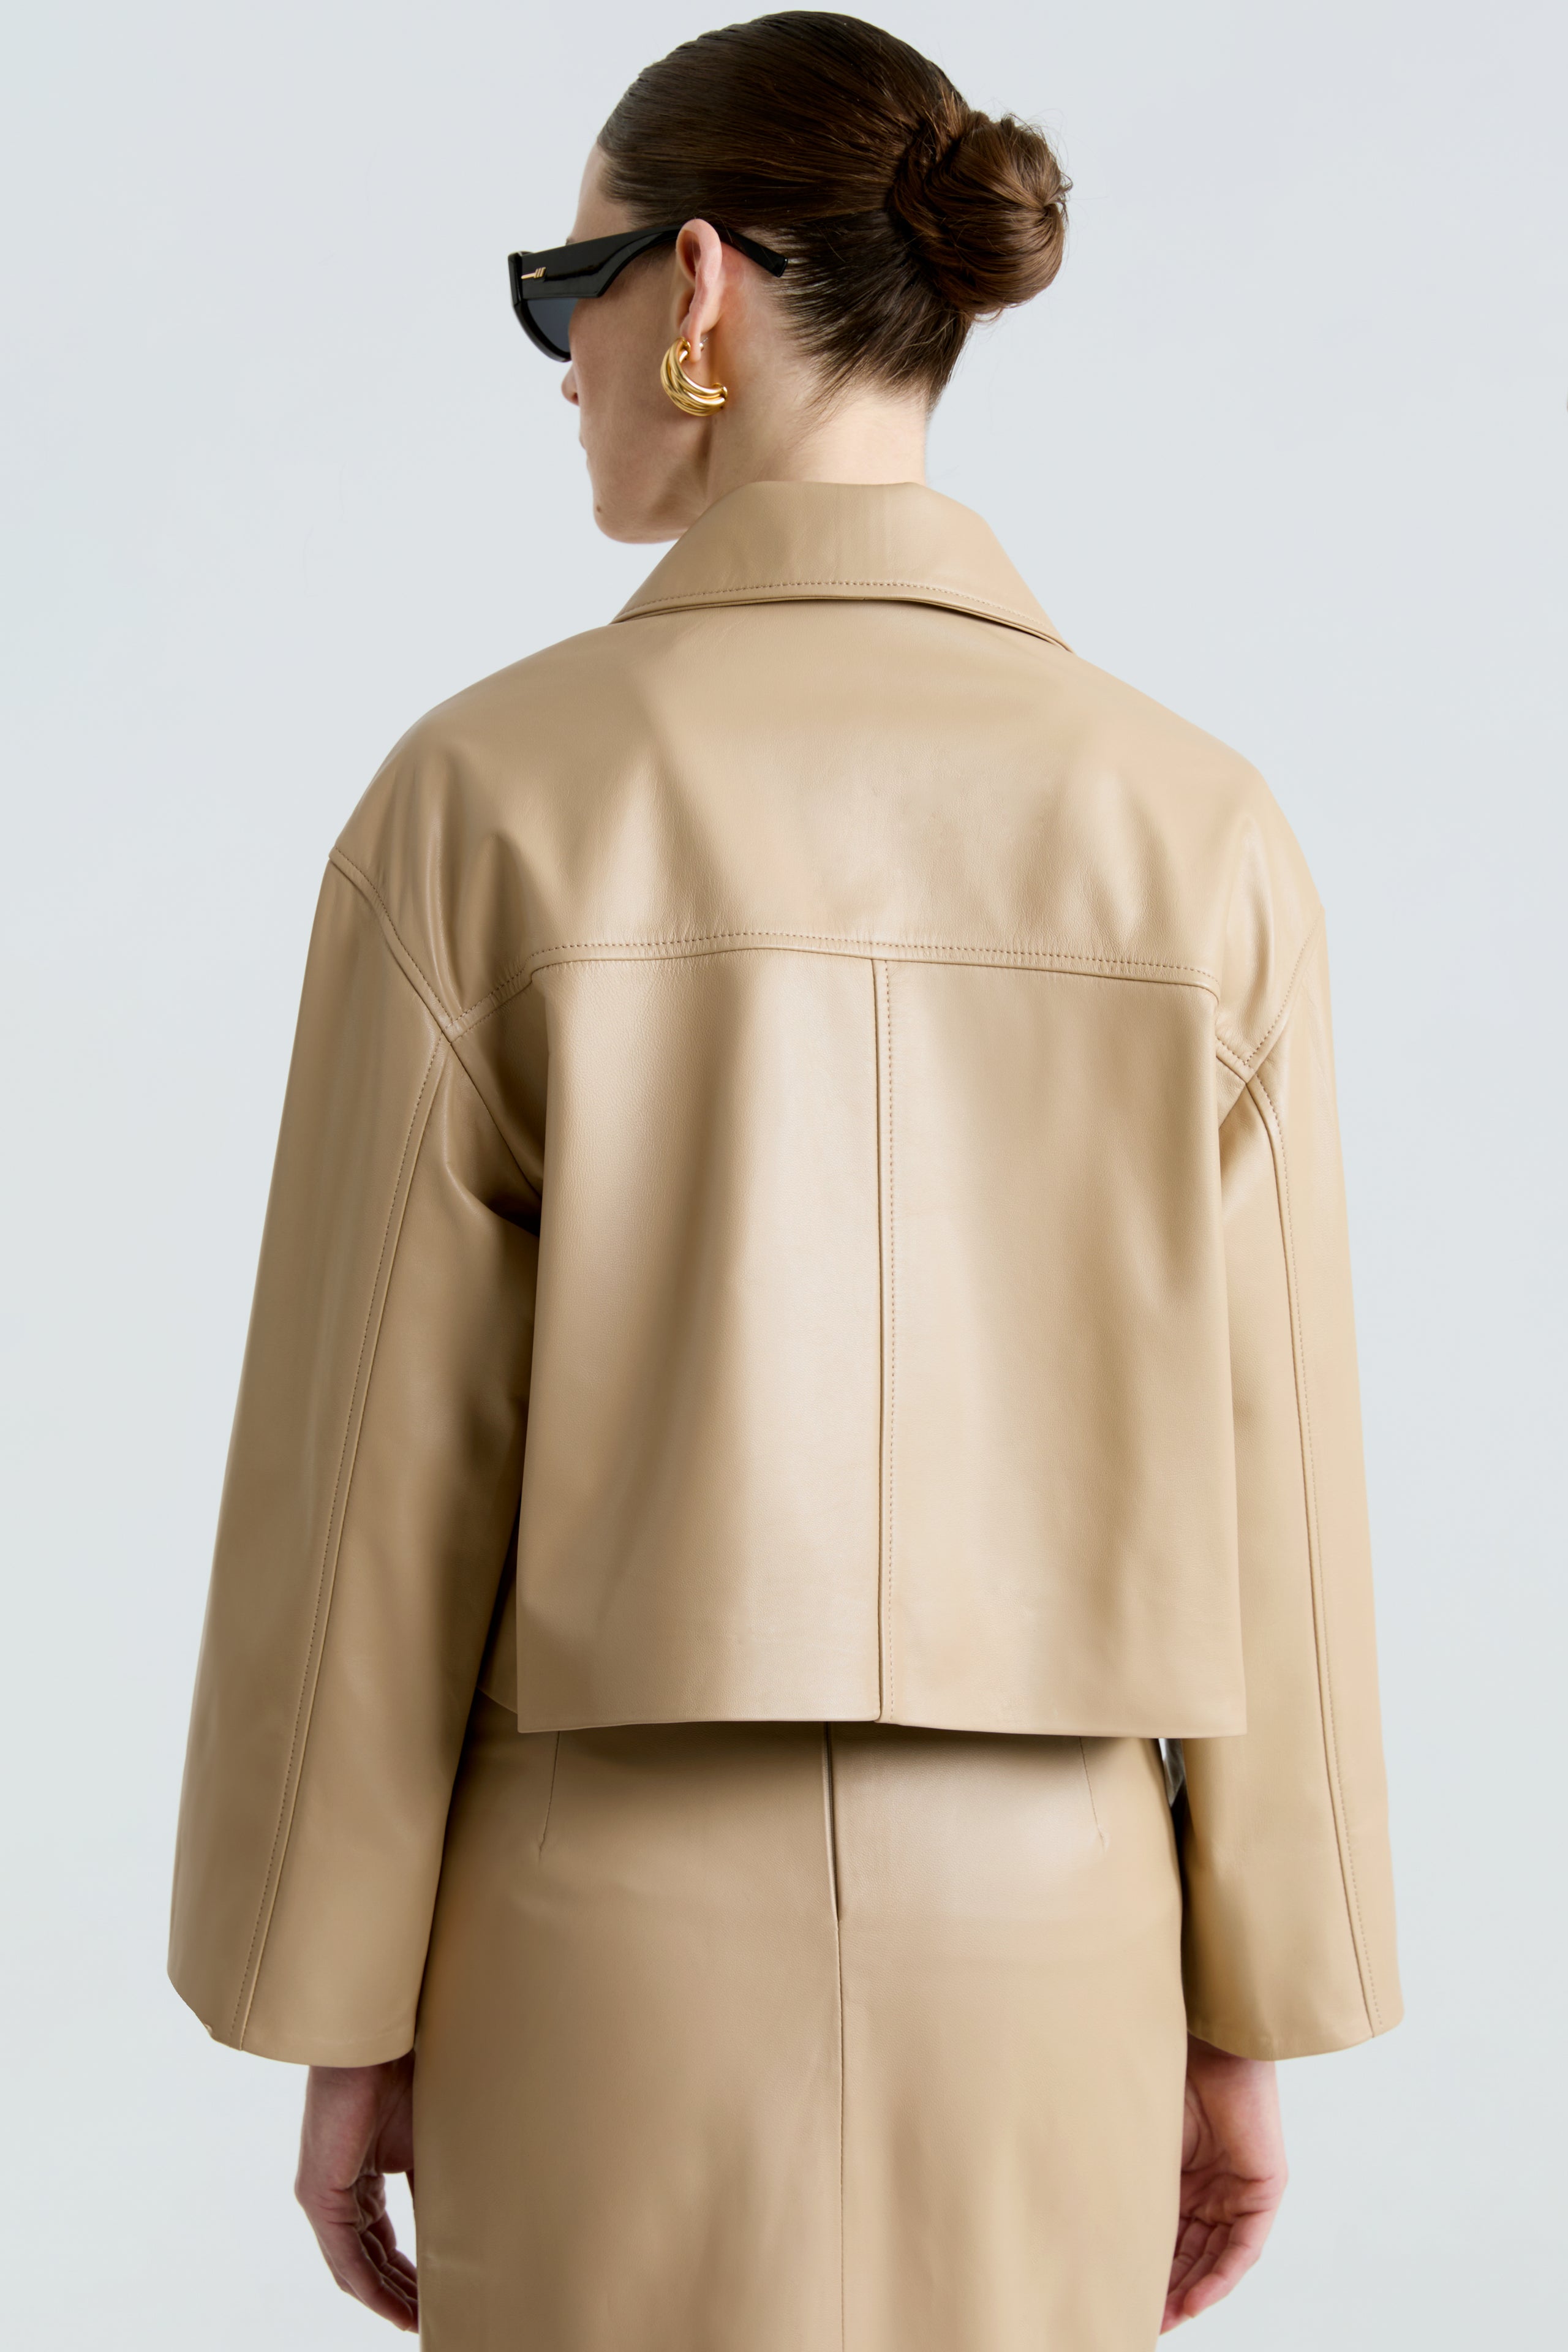 Model is wearing the Sloan Beige Minimalist Leather Jacket Close Up